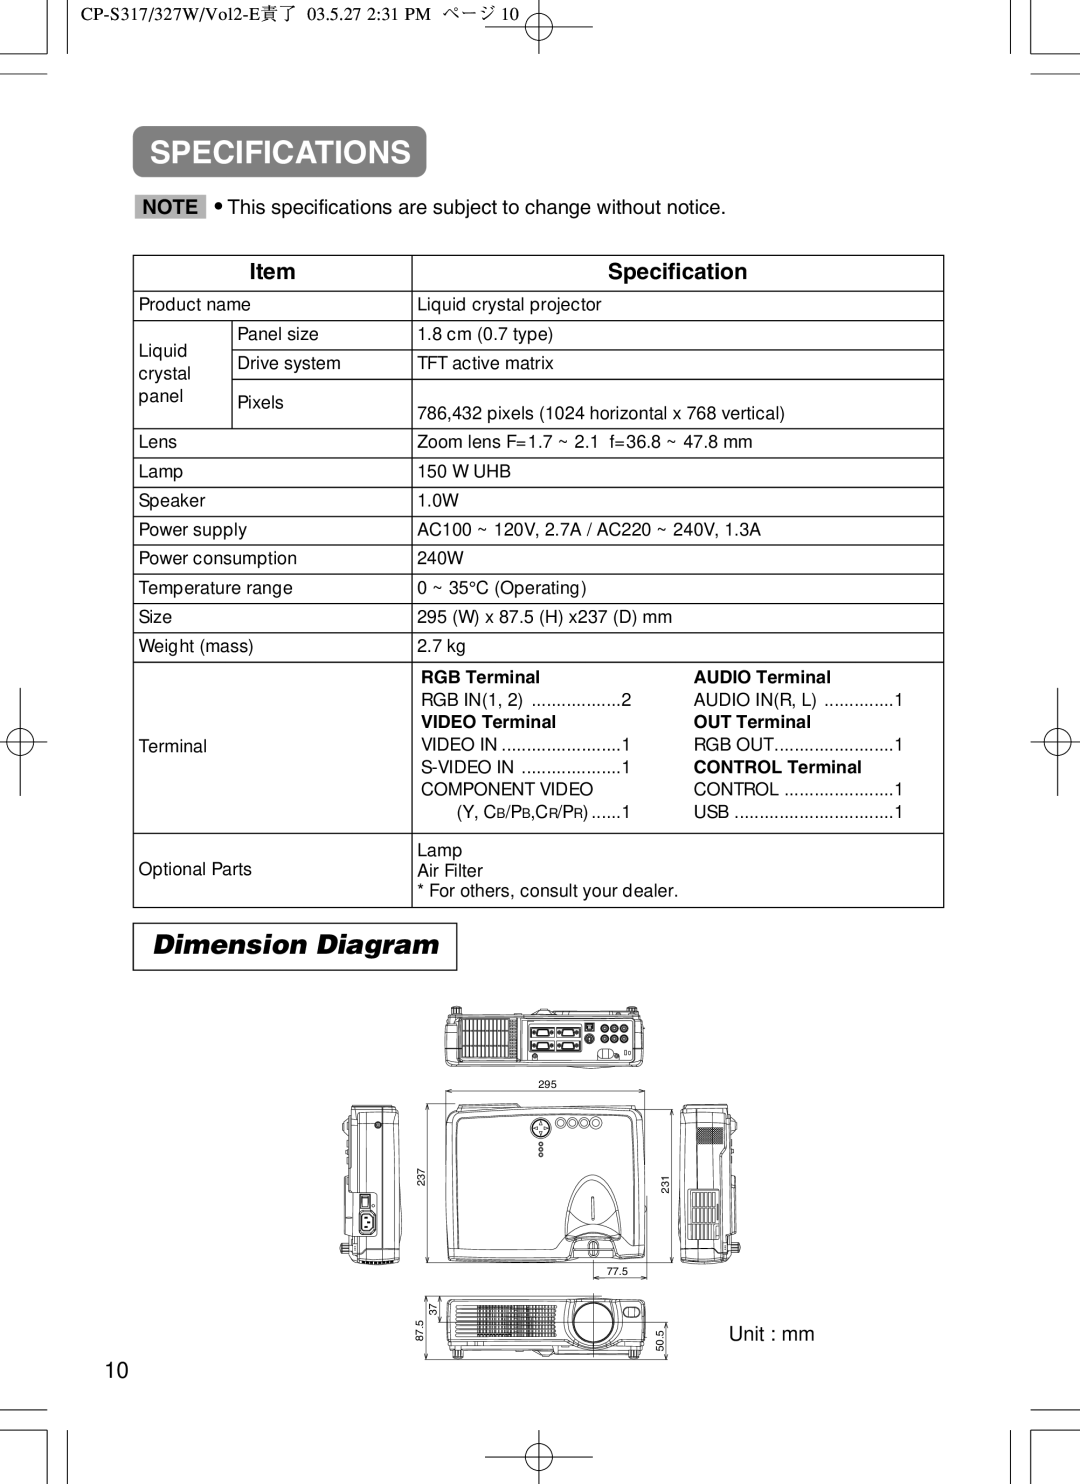 BOXLIGHT CP-322I user manual Specifications, Dimension Diagram 